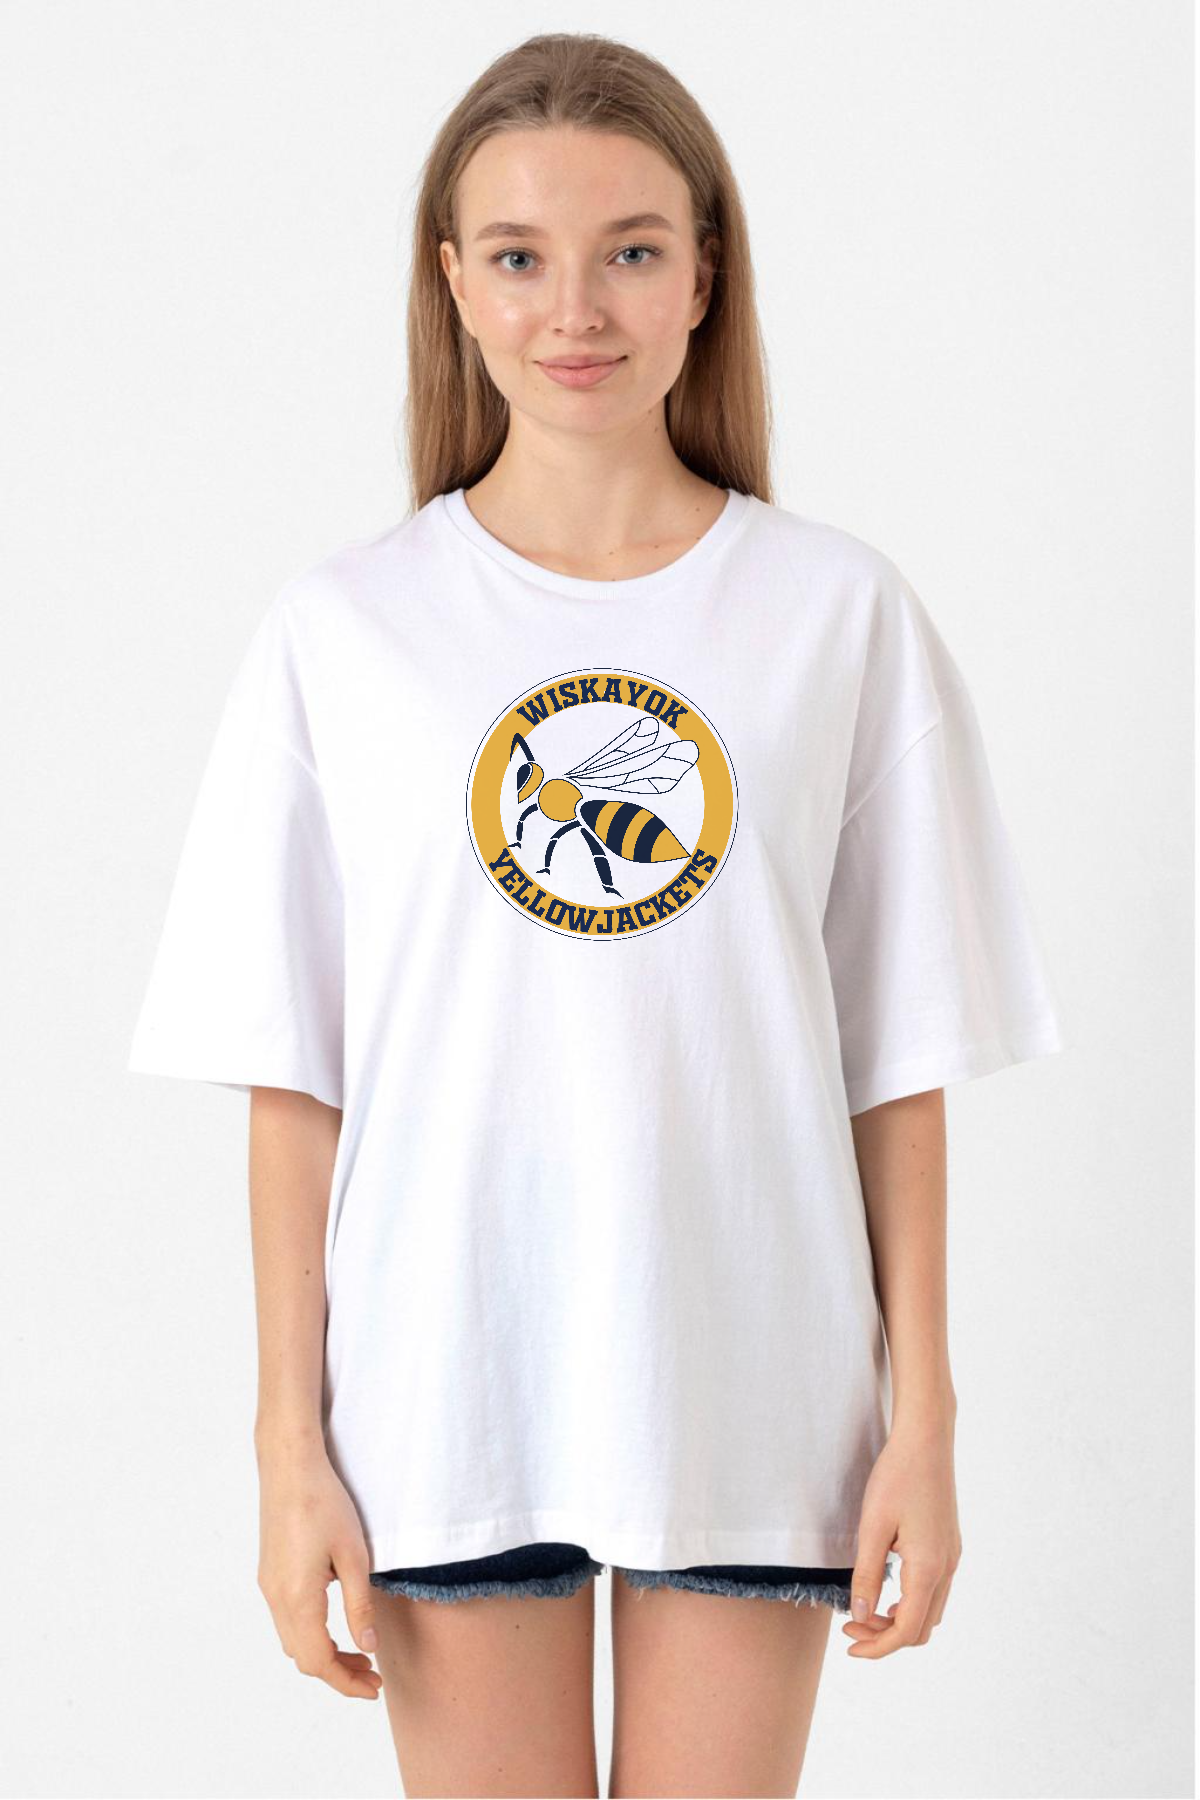 Wiskayok Yellowjackets Logo Beyaz Kadın Oversize Tshirt